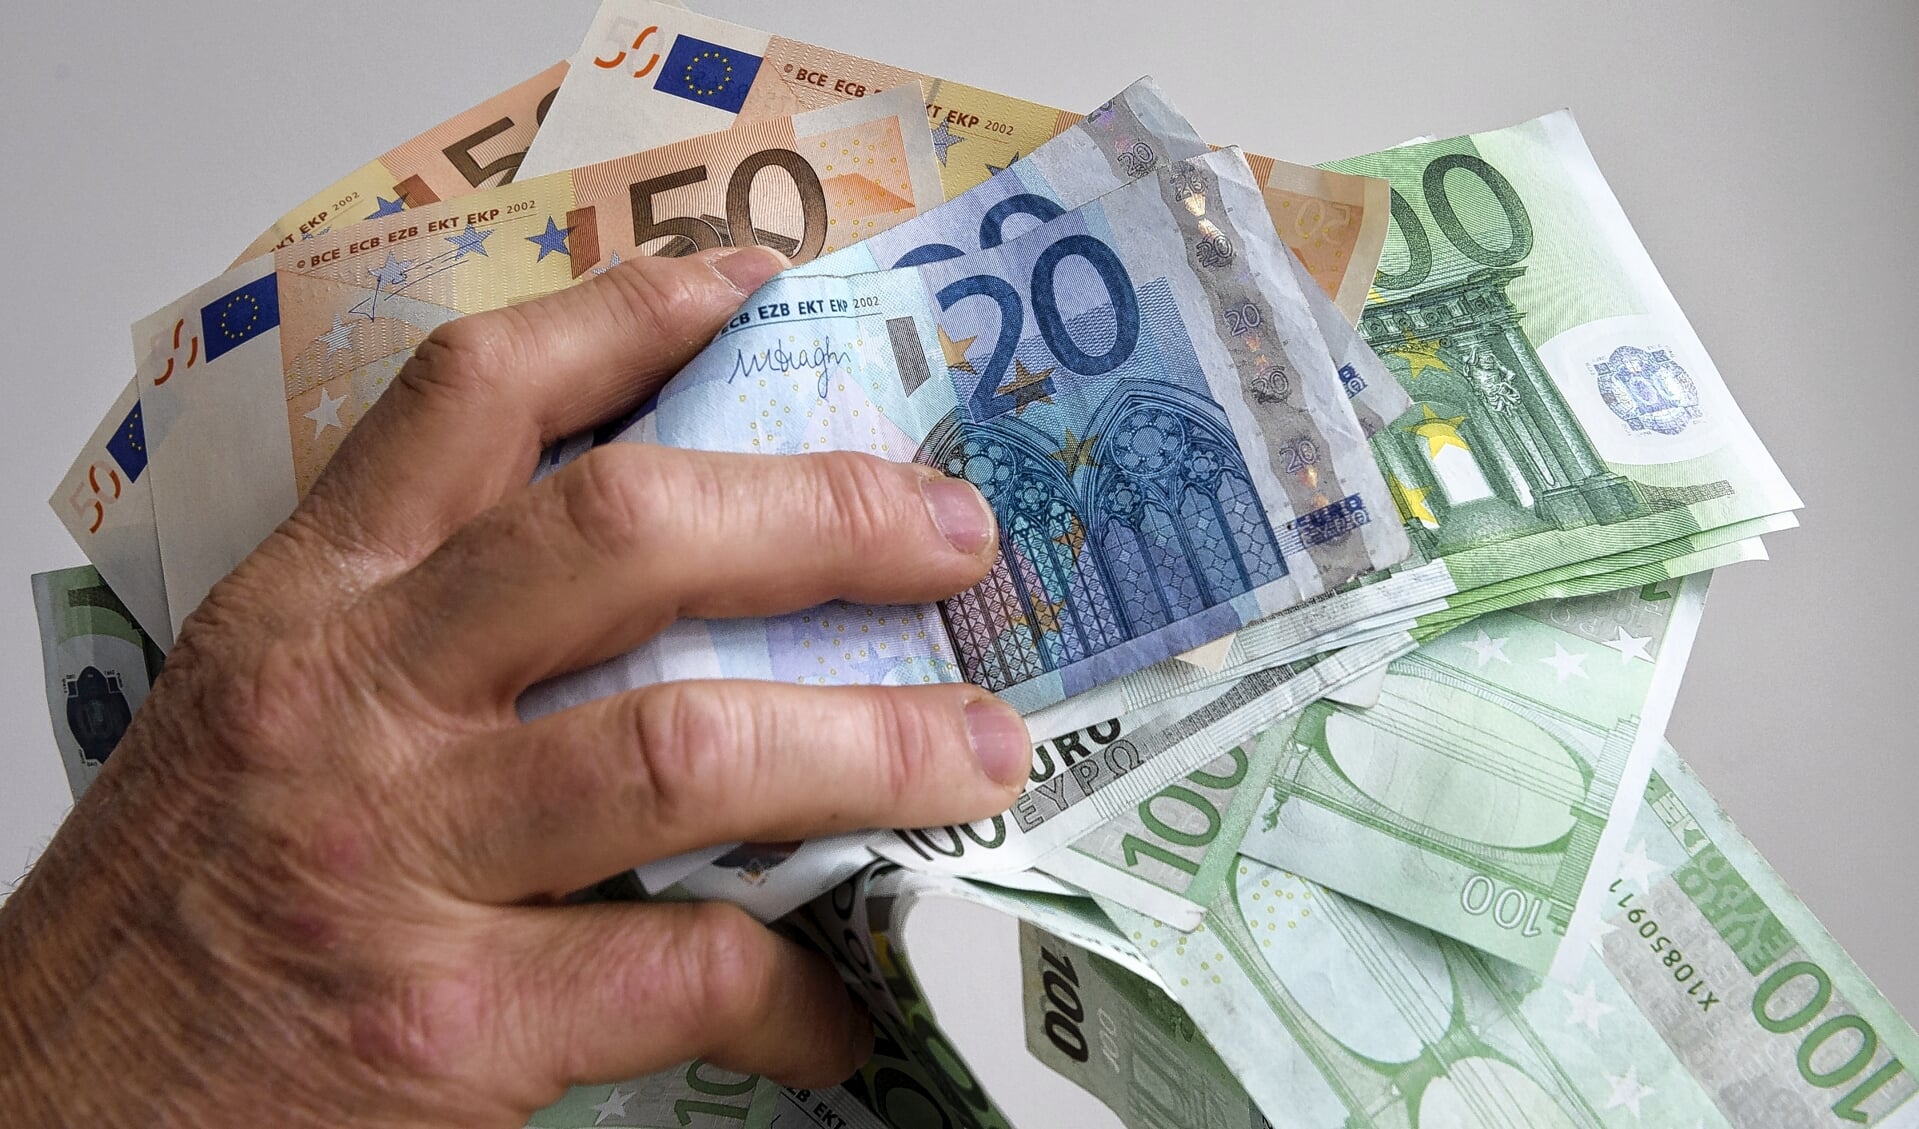 ANP XTRA Den Haag zwart, financiën, europa, papier, rijkdom, bankbiljet, geld, valuta, 20, europese